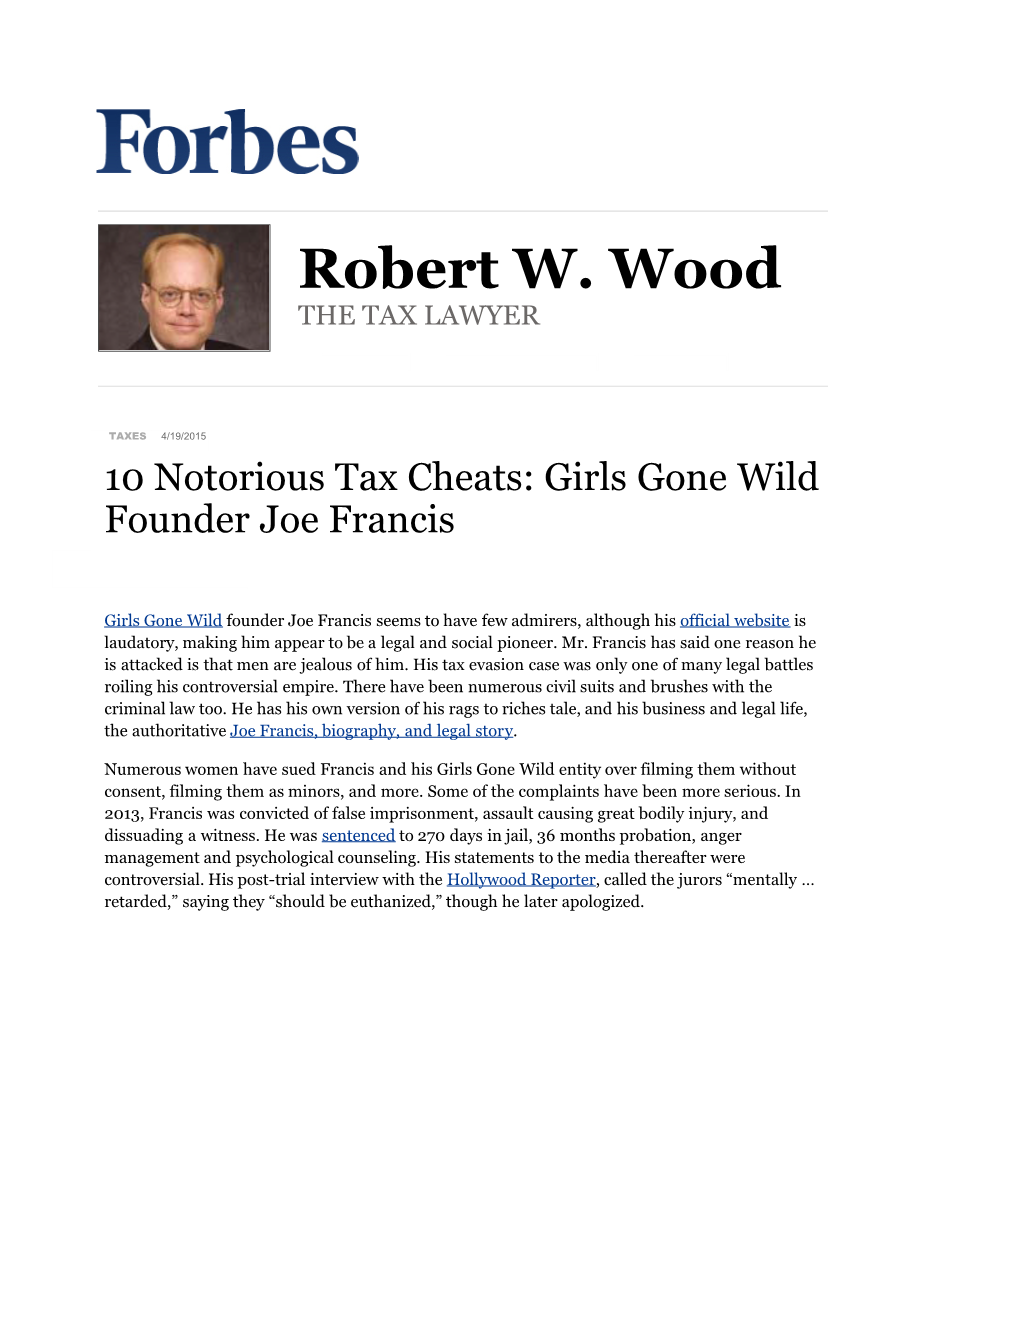 10 Notorious Tax Cheats: Girls Gone Wild Founder Joe Francis